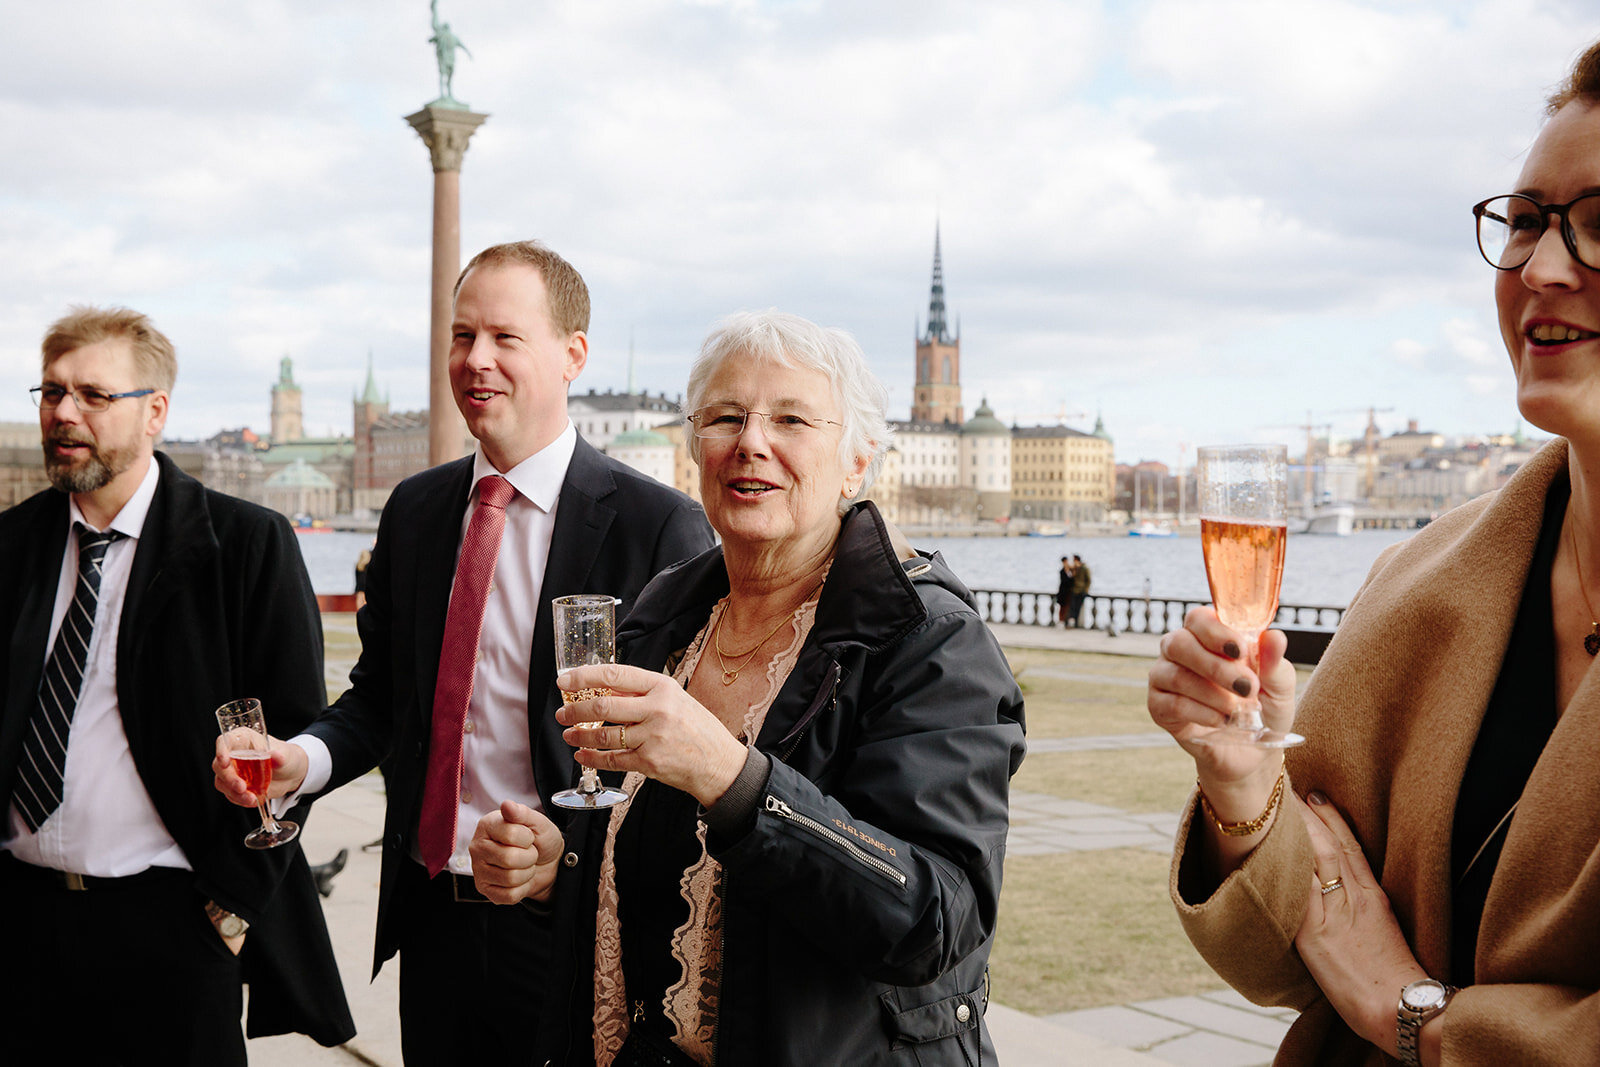 stockholm-city-hall-wedding-documentary-melissa-habegger-048.jpg